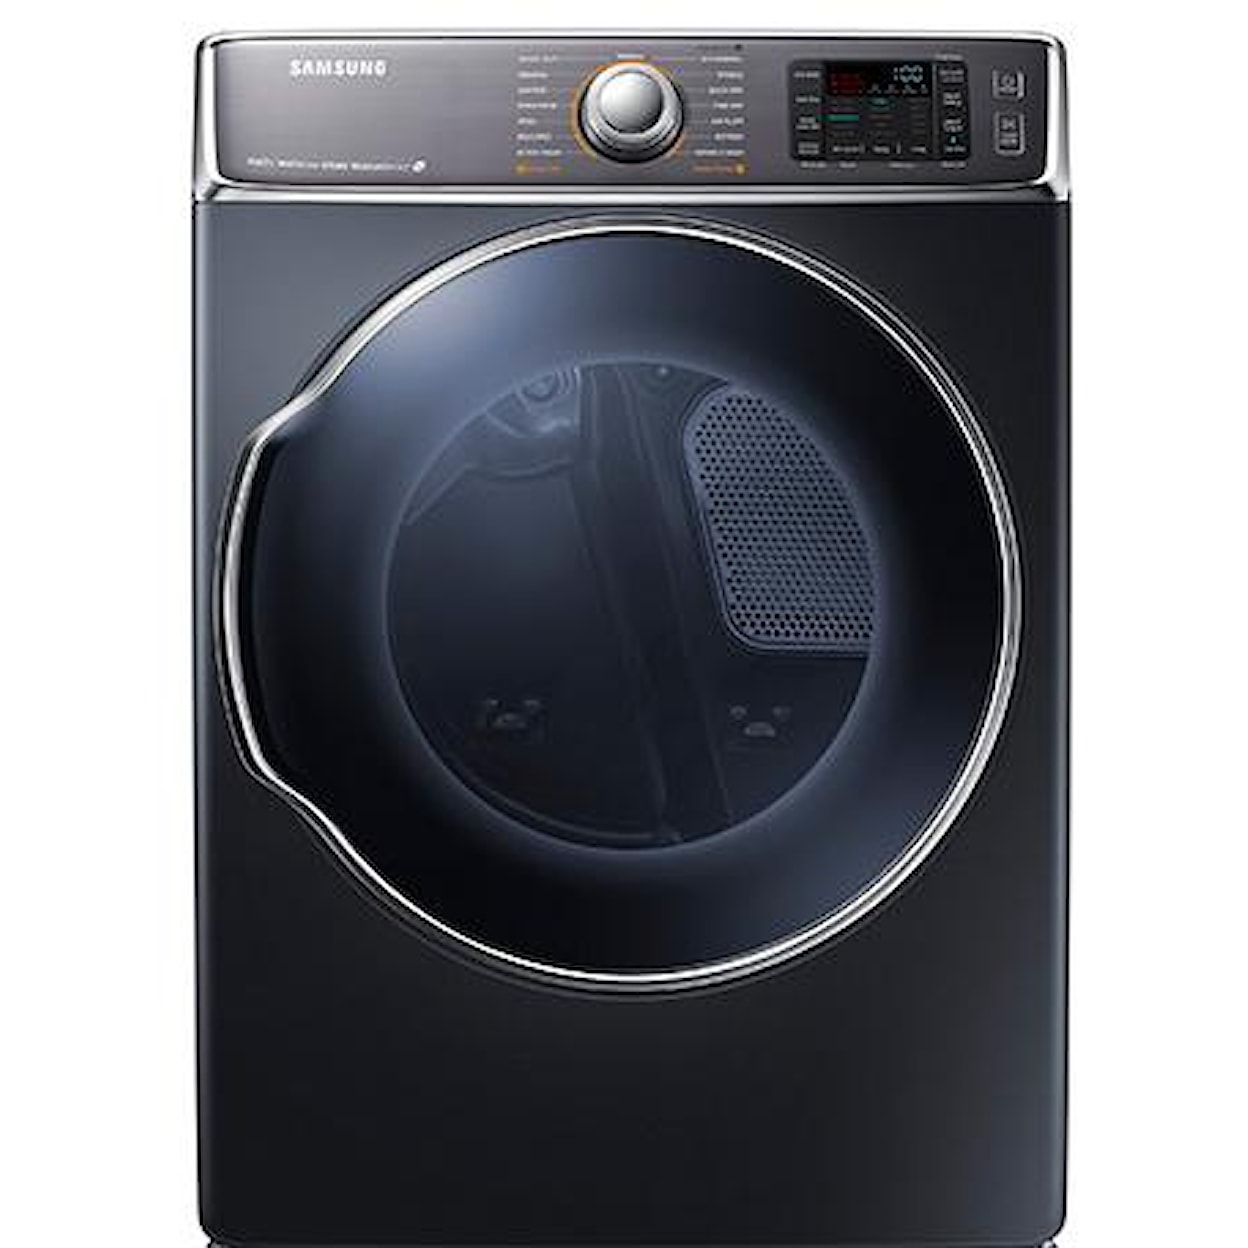 Samsung Appliances Gas Dryers 9.5 cu. ft. Gas Front Load Dryer